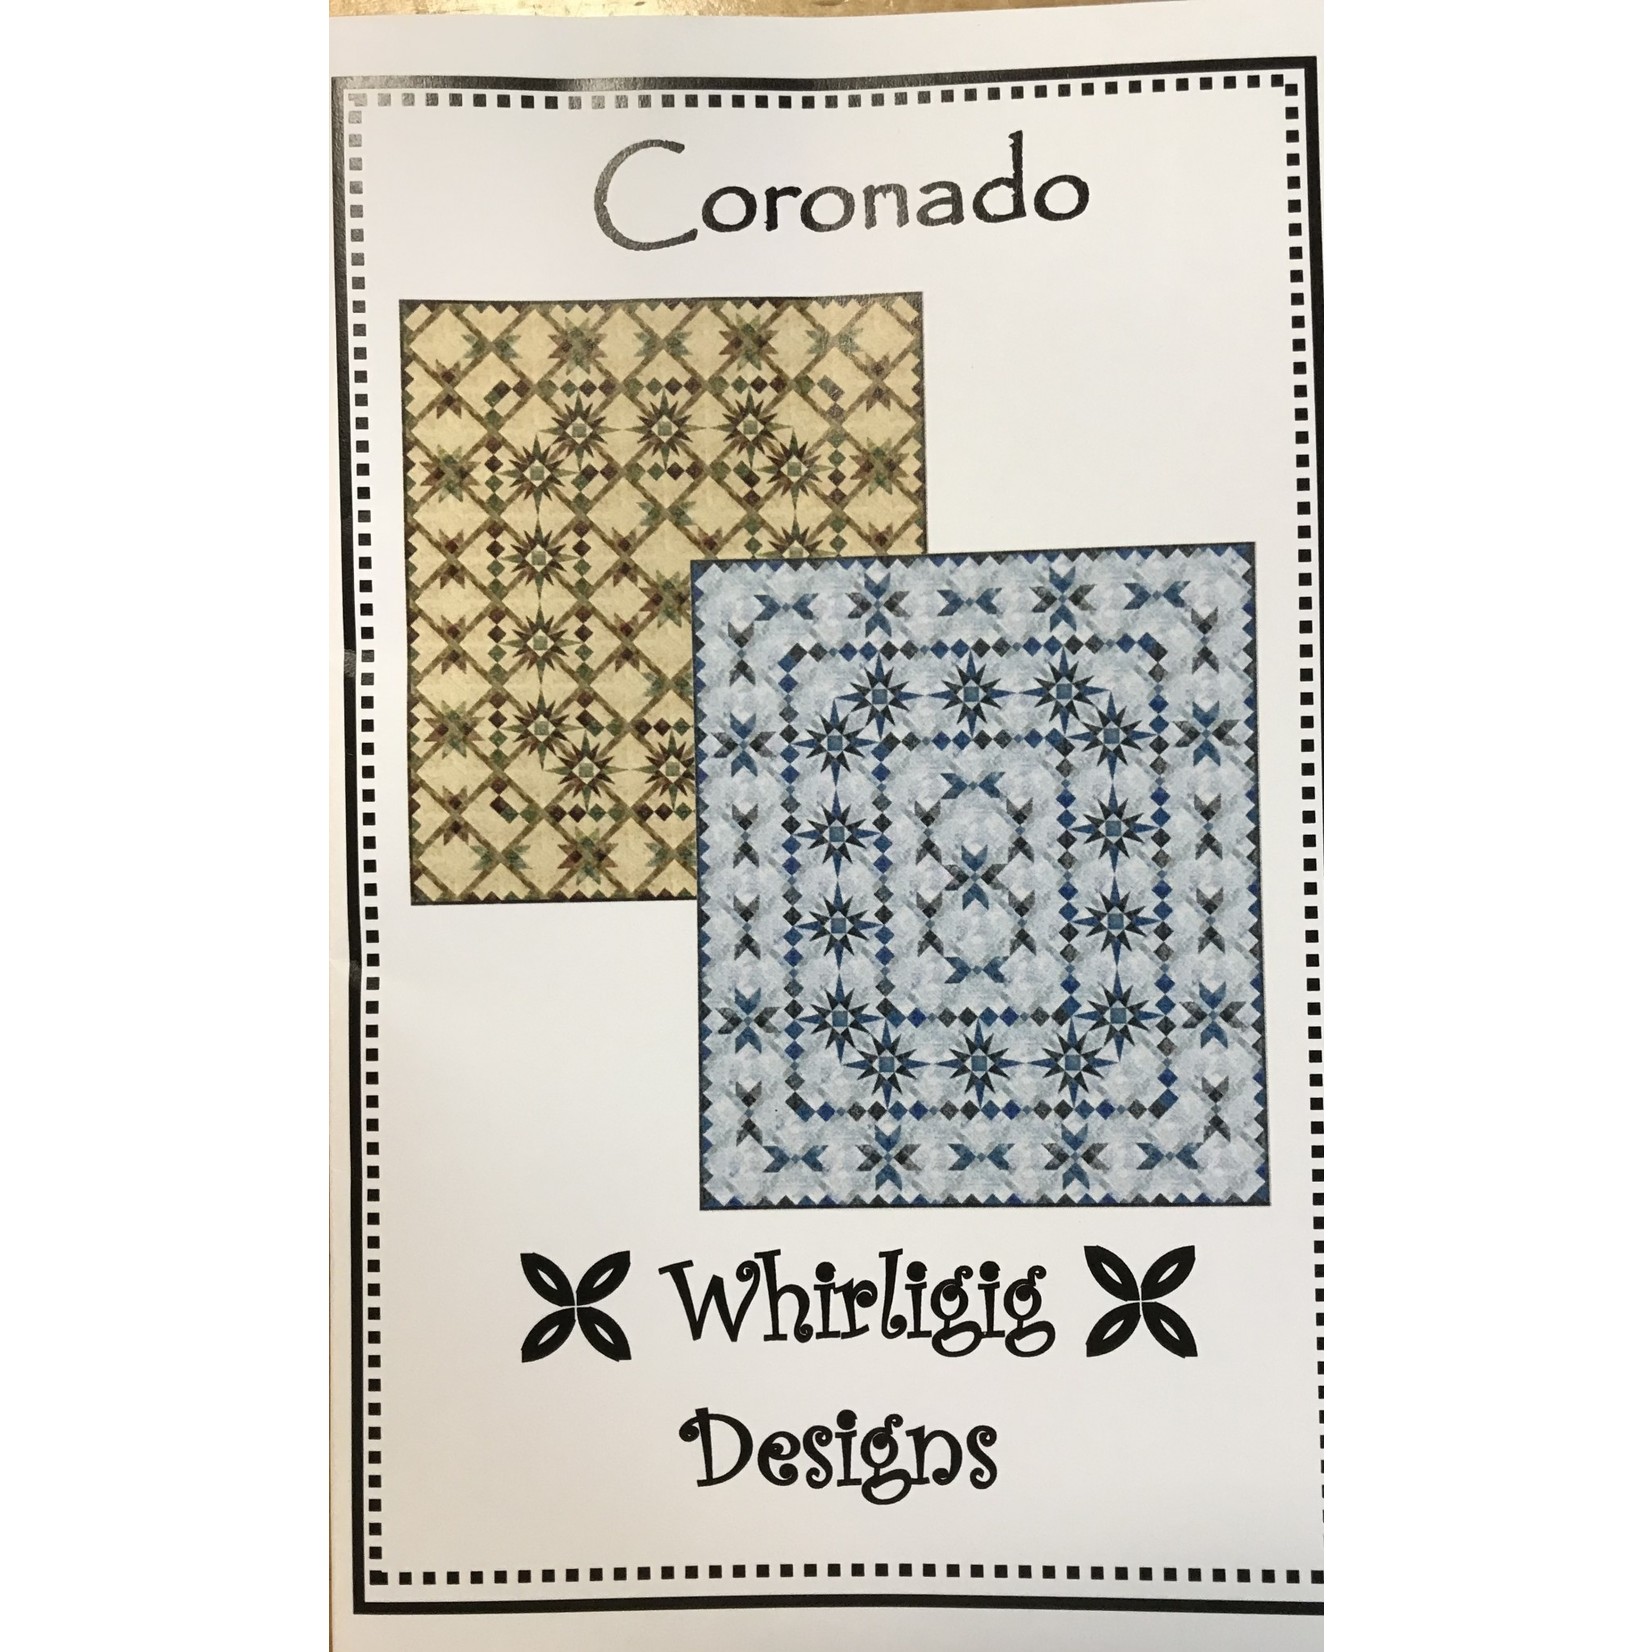 Whirligig Designs CORONADO PATTERN